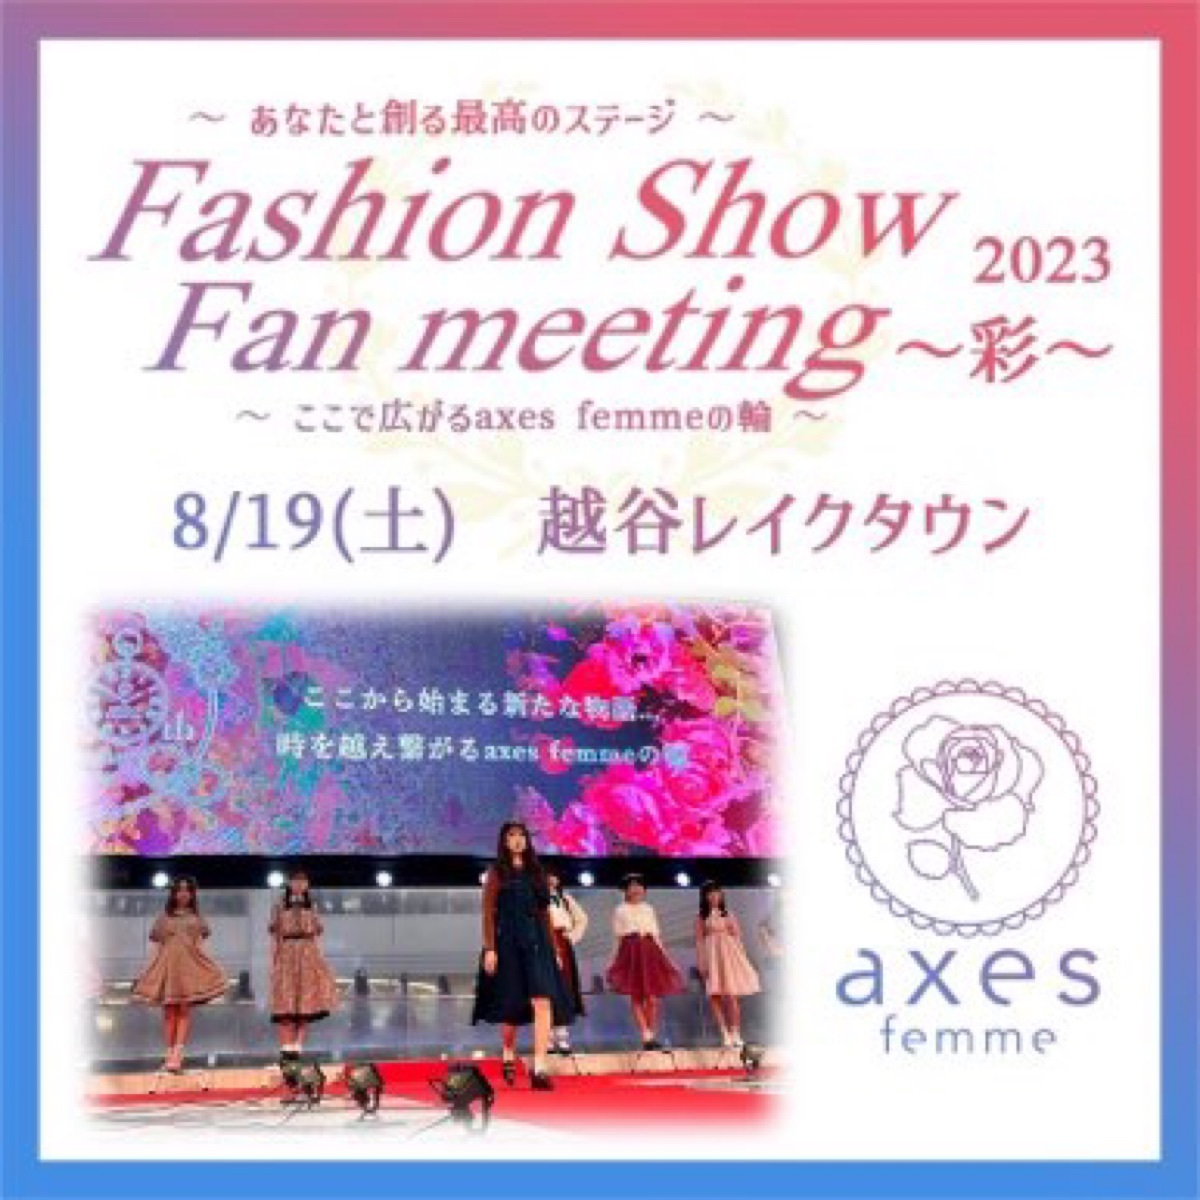 FashionShow fanmeeting越谷レイクタウン